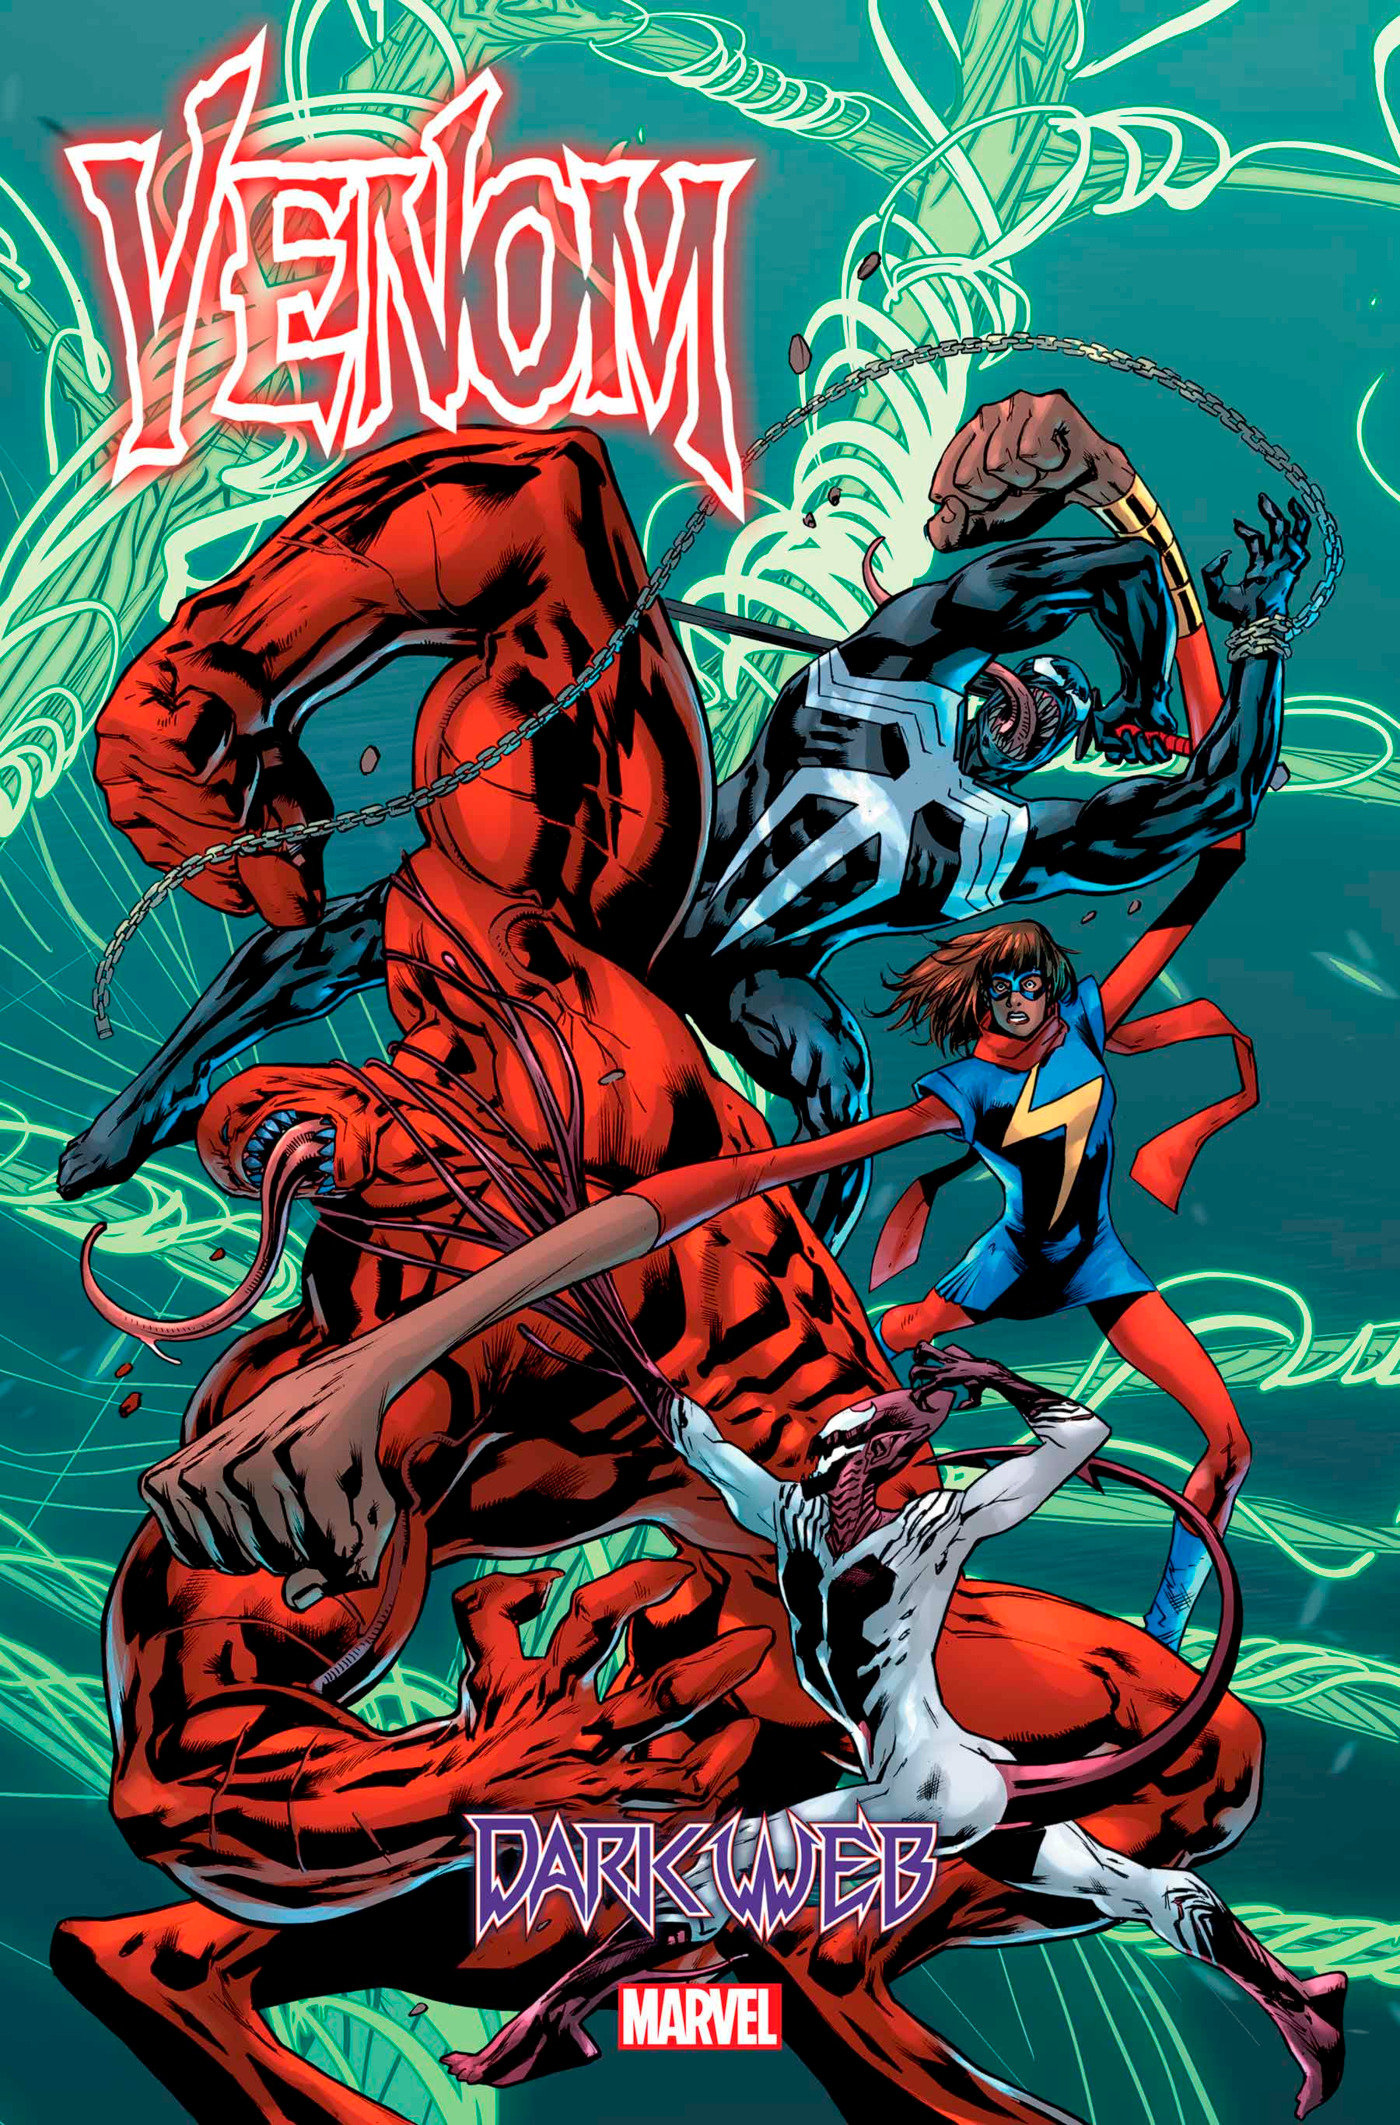 Venom #16 [Dark Web]